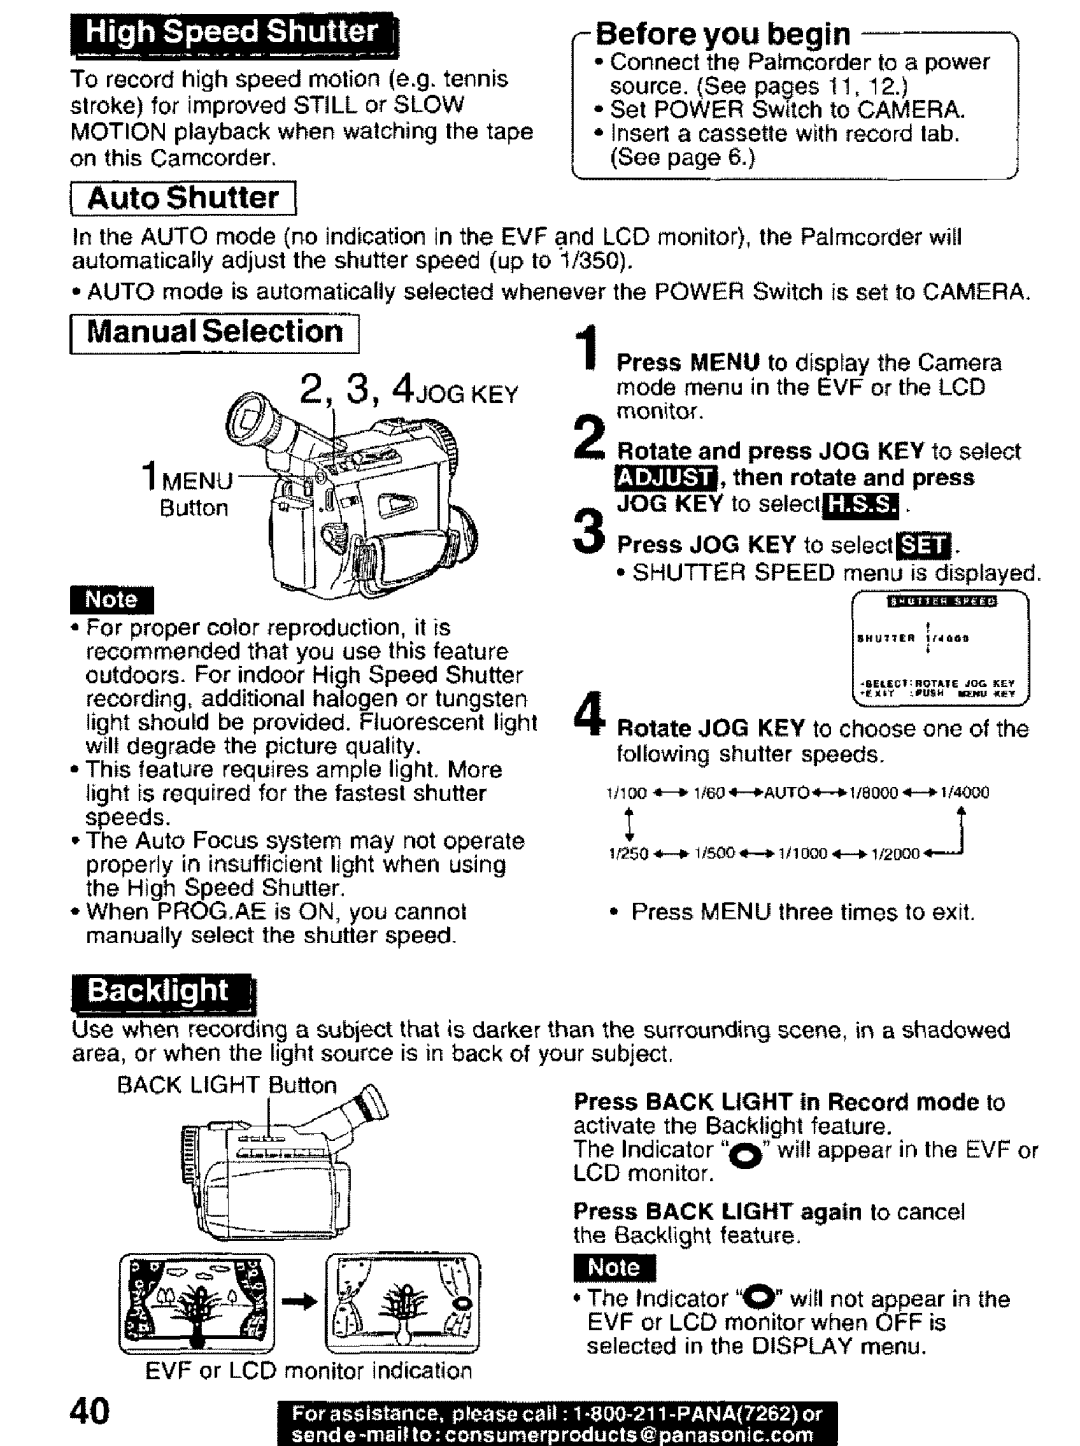 Panasonic PV-DV101 manual 3, 4JoGKEY, I Auto Shutter, I Manual Selection, SHIITTERiCd-O, Before you begin 